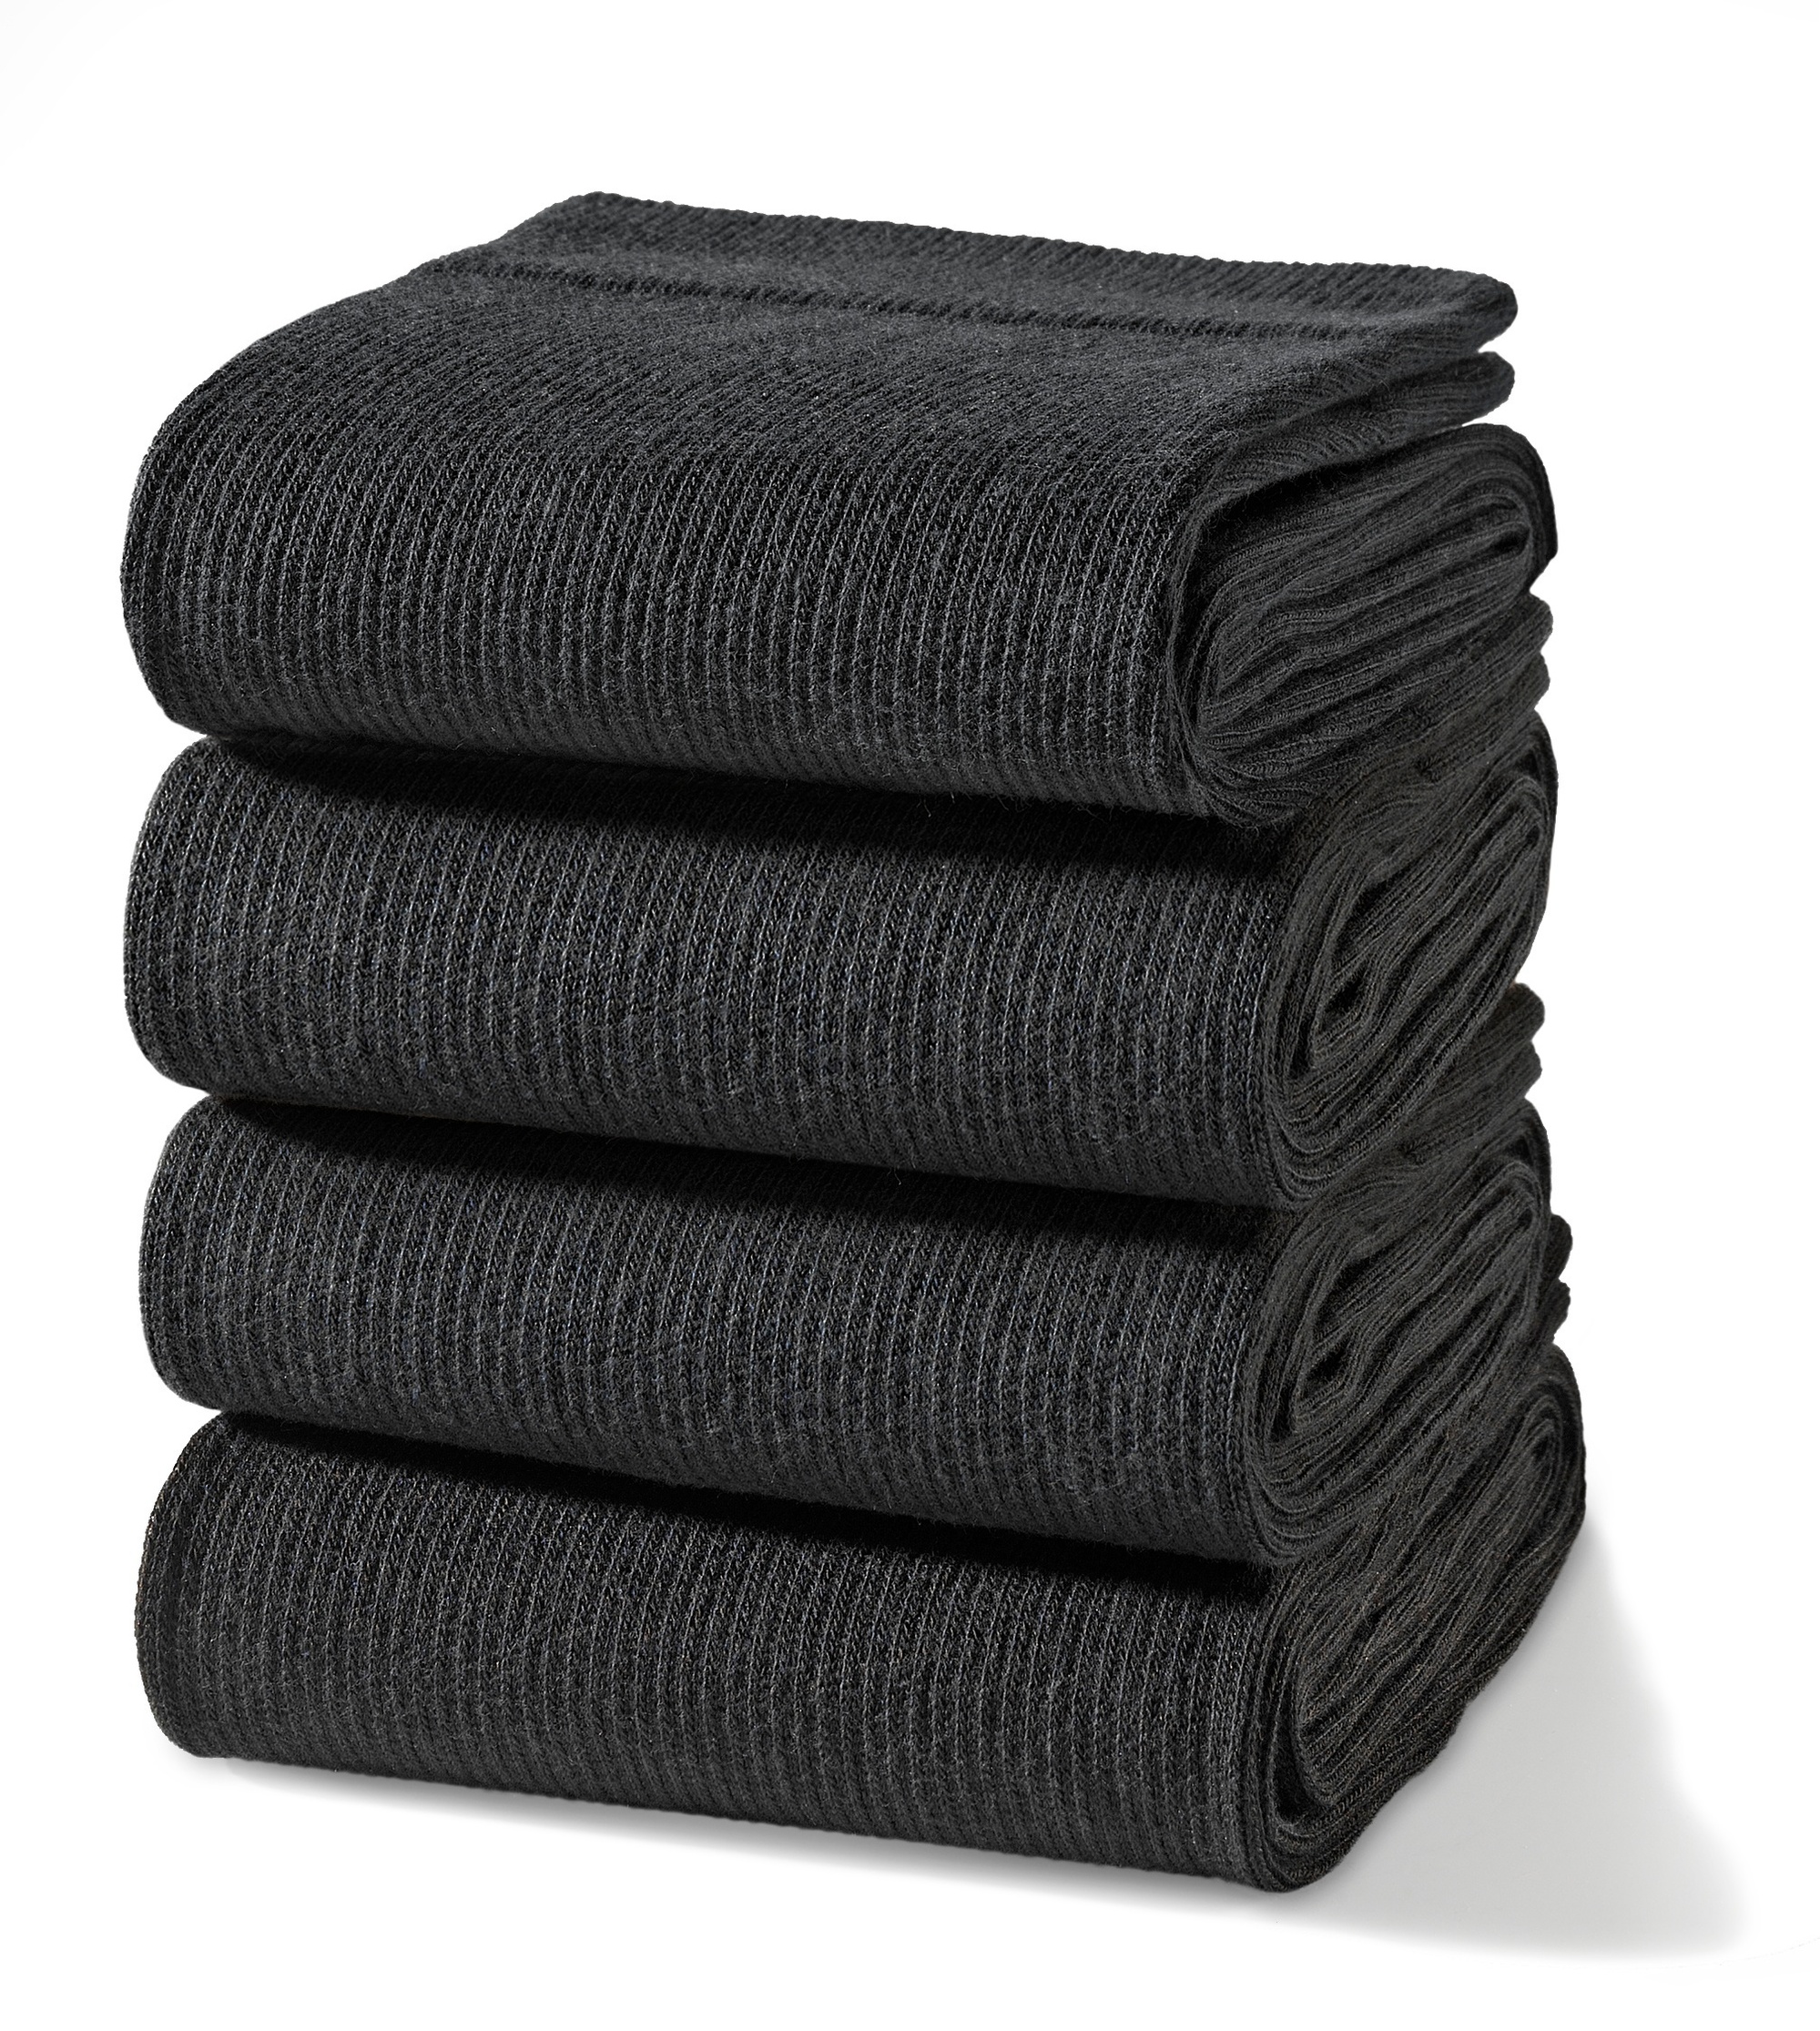 Stützstrümpfe Baumwolle 3+1 Bonuspack, schwarz Größe: L 41-43